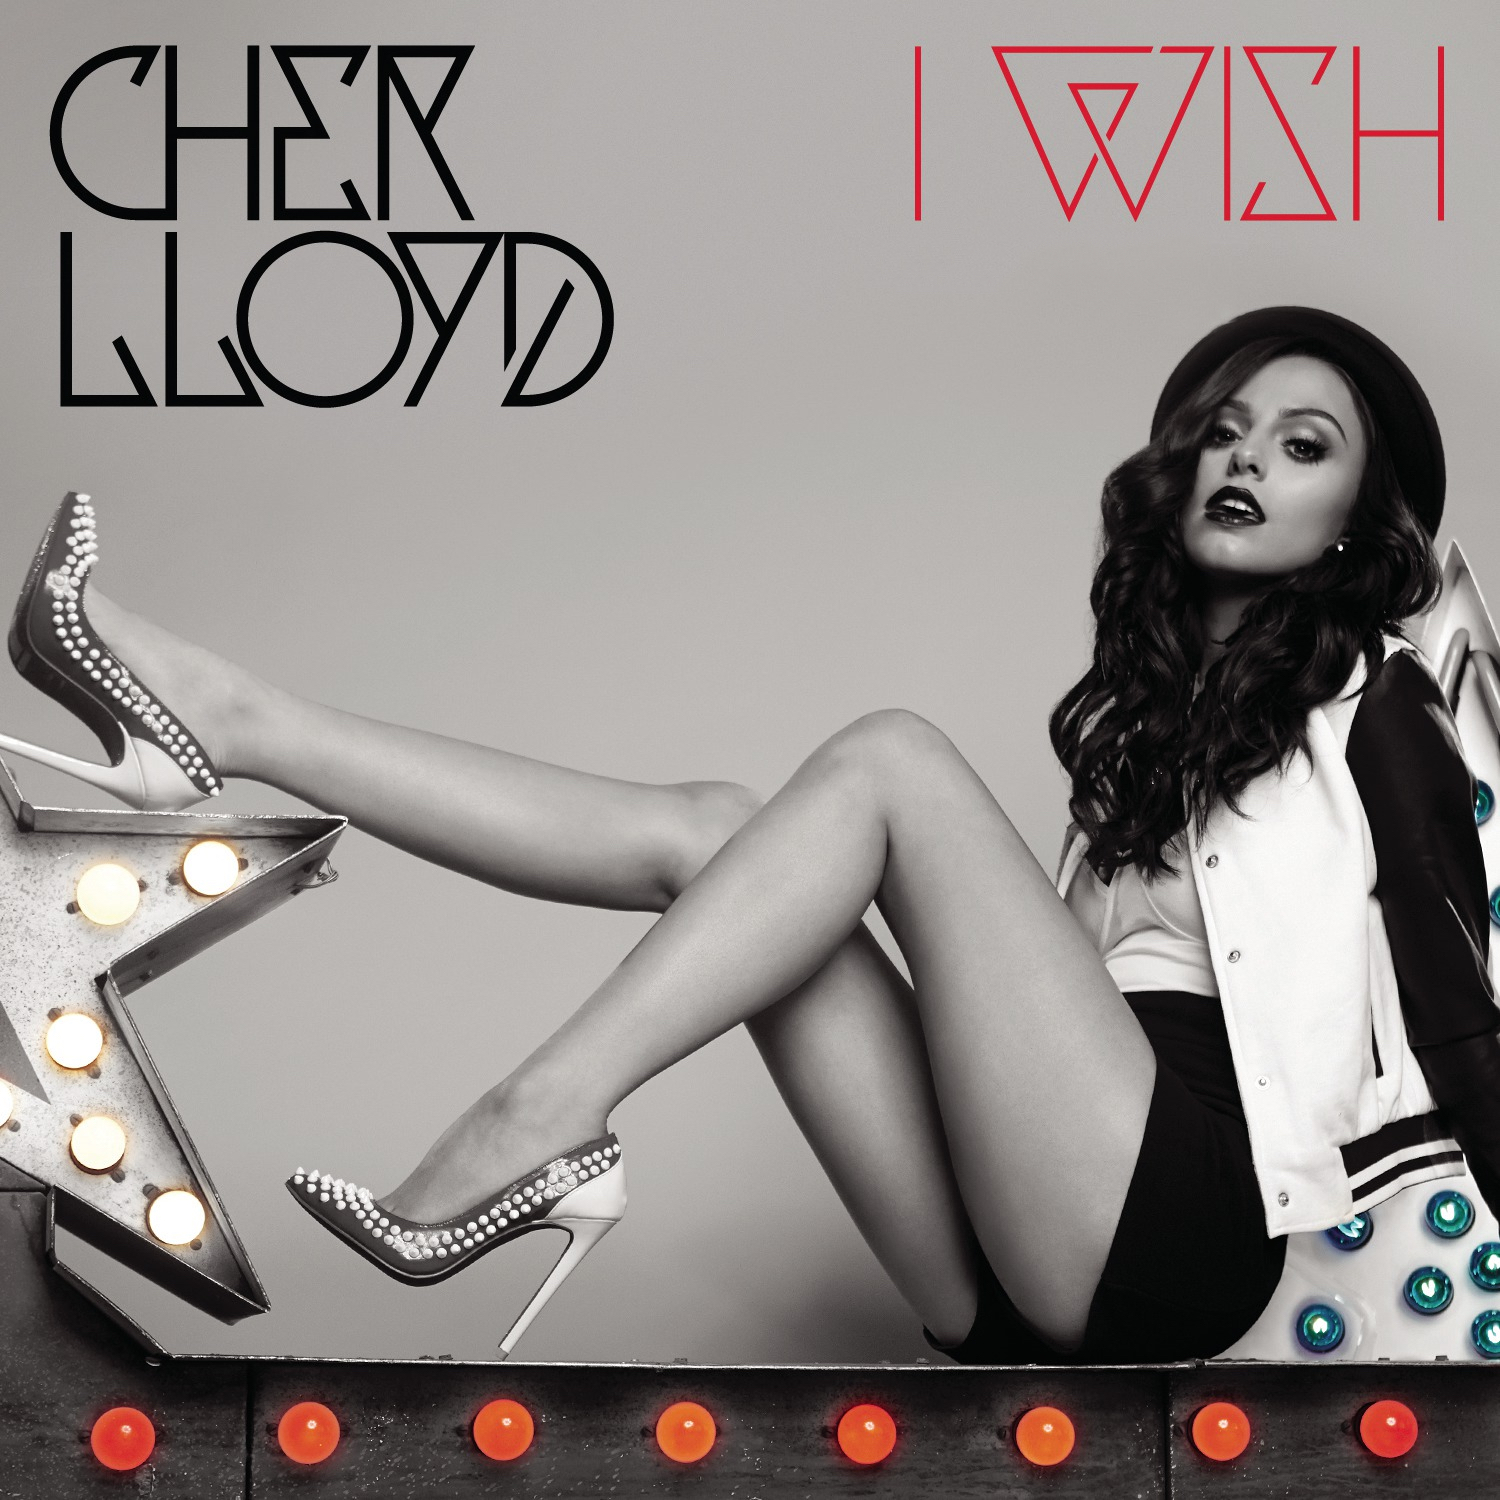 Cher Lloyd — I Wish cover artwork